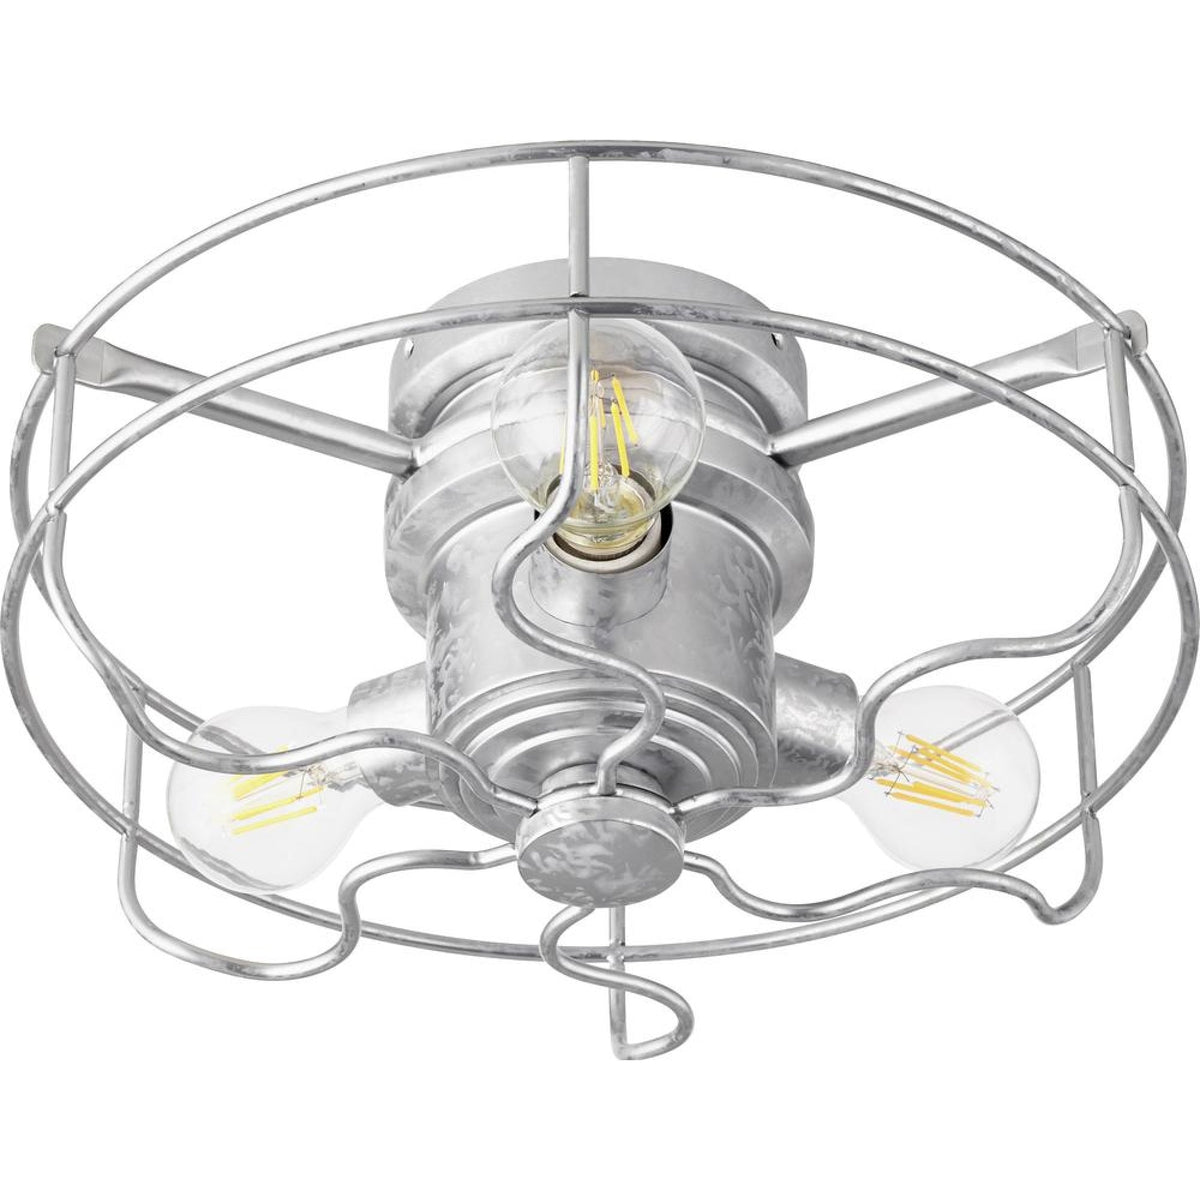 Quorum Windmill Fan Open Cage Light Kit - Galvanized 1905-9 Coastal Lighting